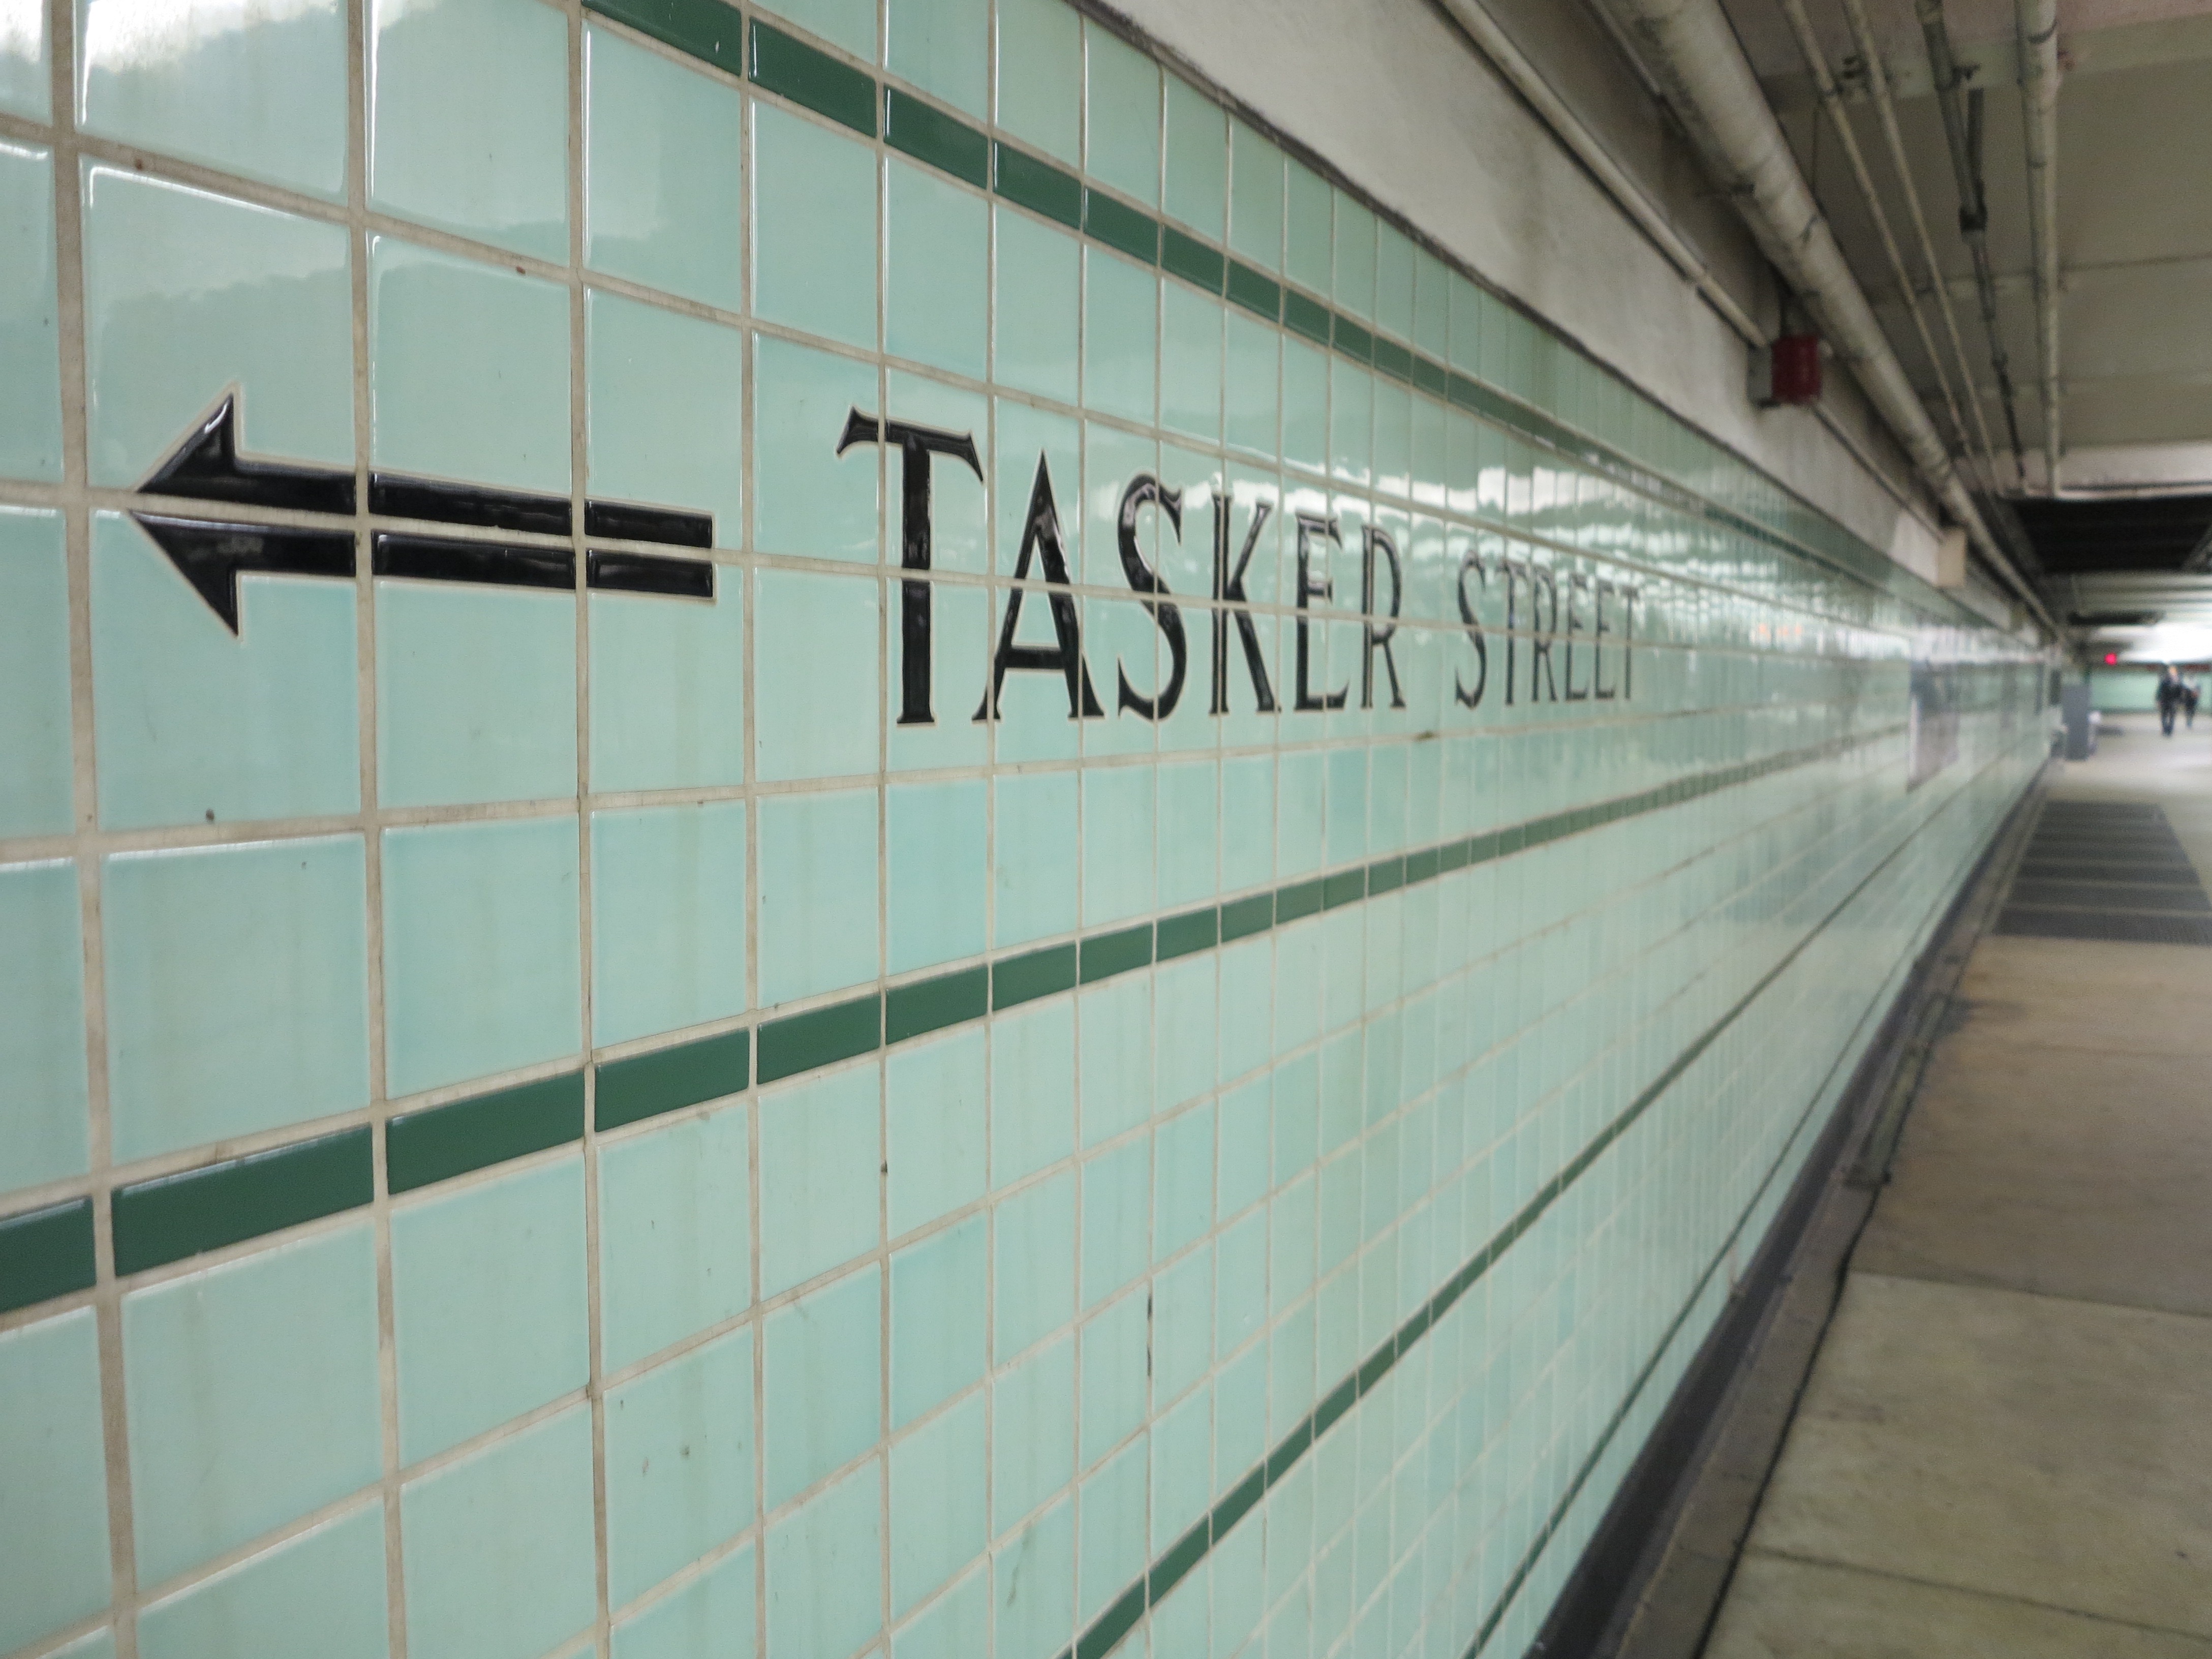 Tasker Street, Broad Street Line